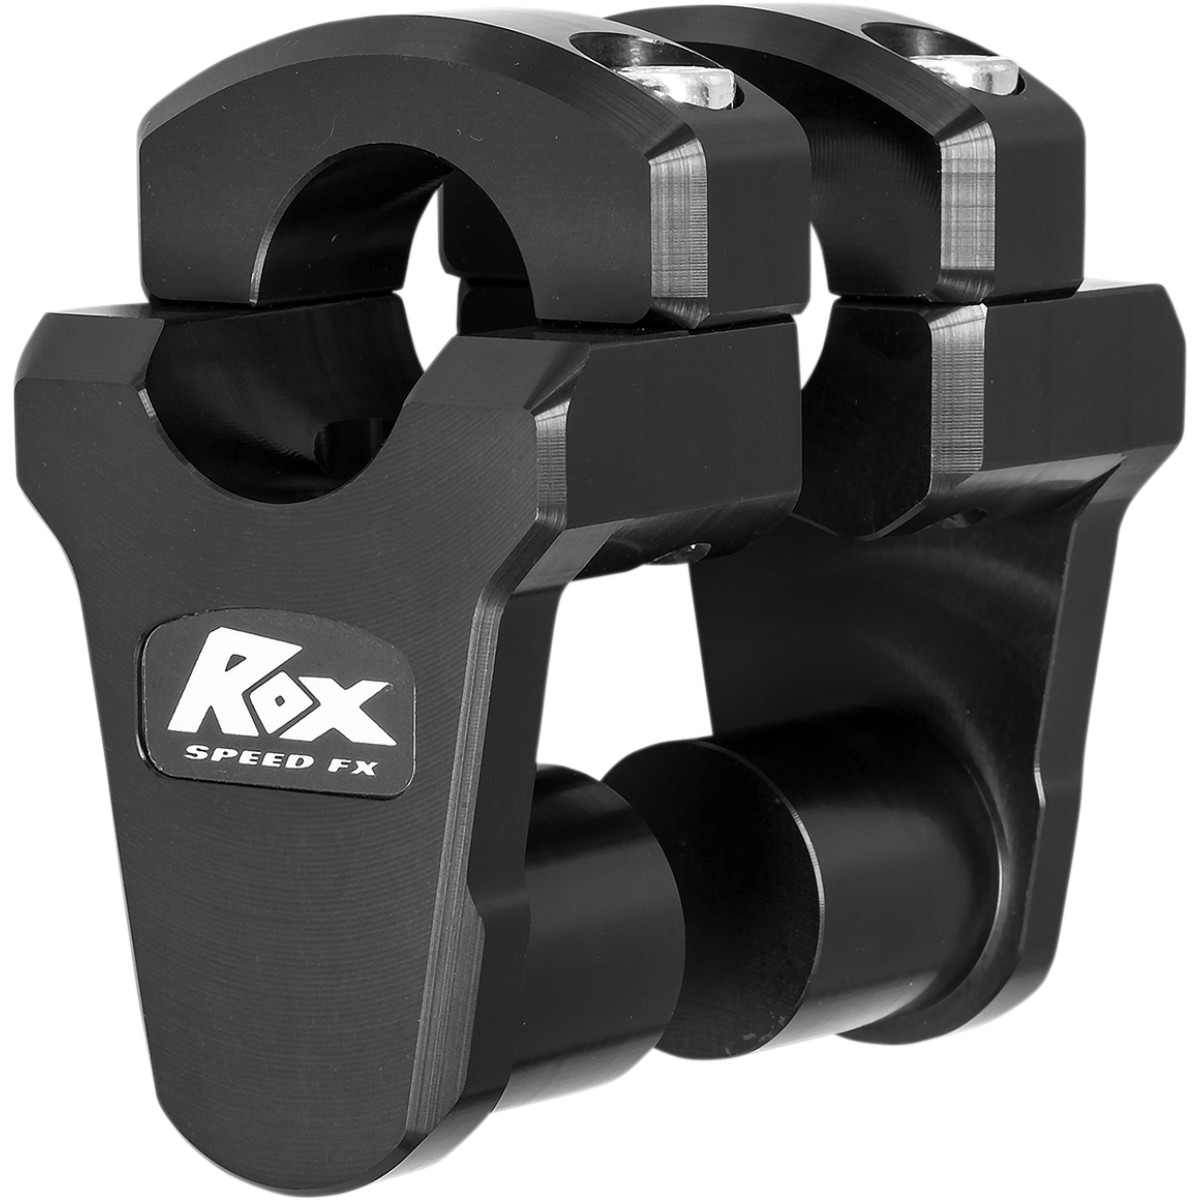 Stúpačky Rox Speed FX (50,8 mm, 28,6 mm)